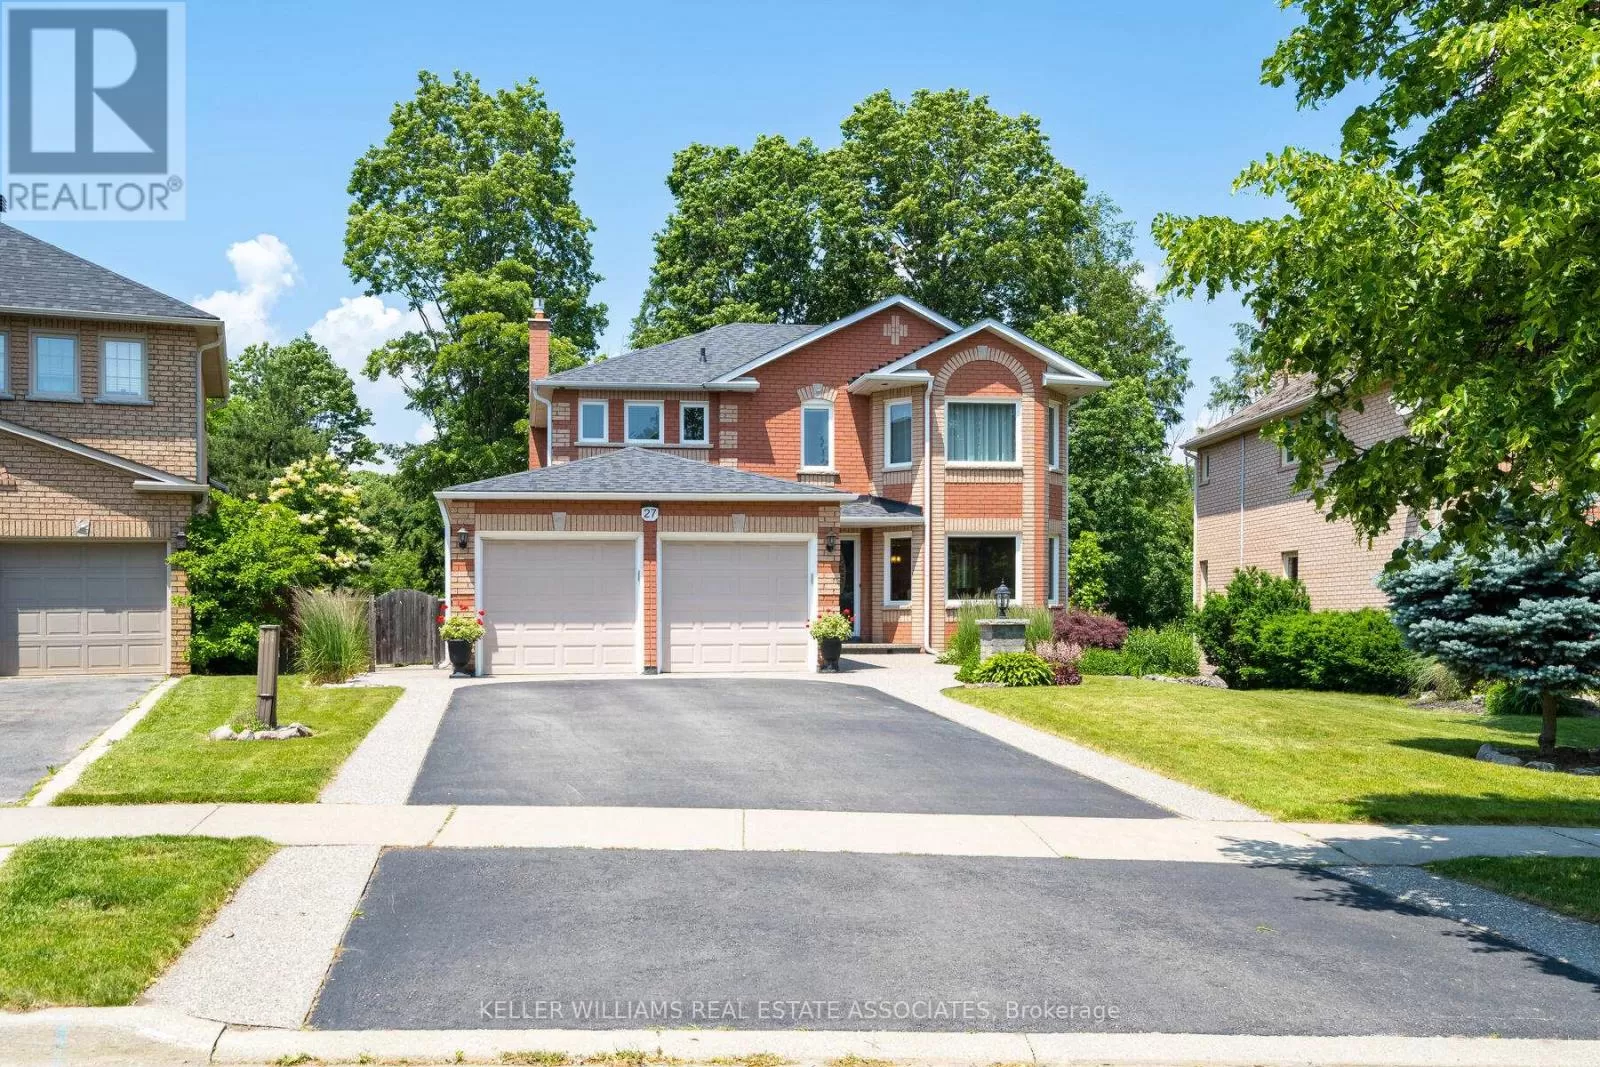 House for rent: 27 Gooderham Dr, Halton Hills, Ontario L7G 5R7